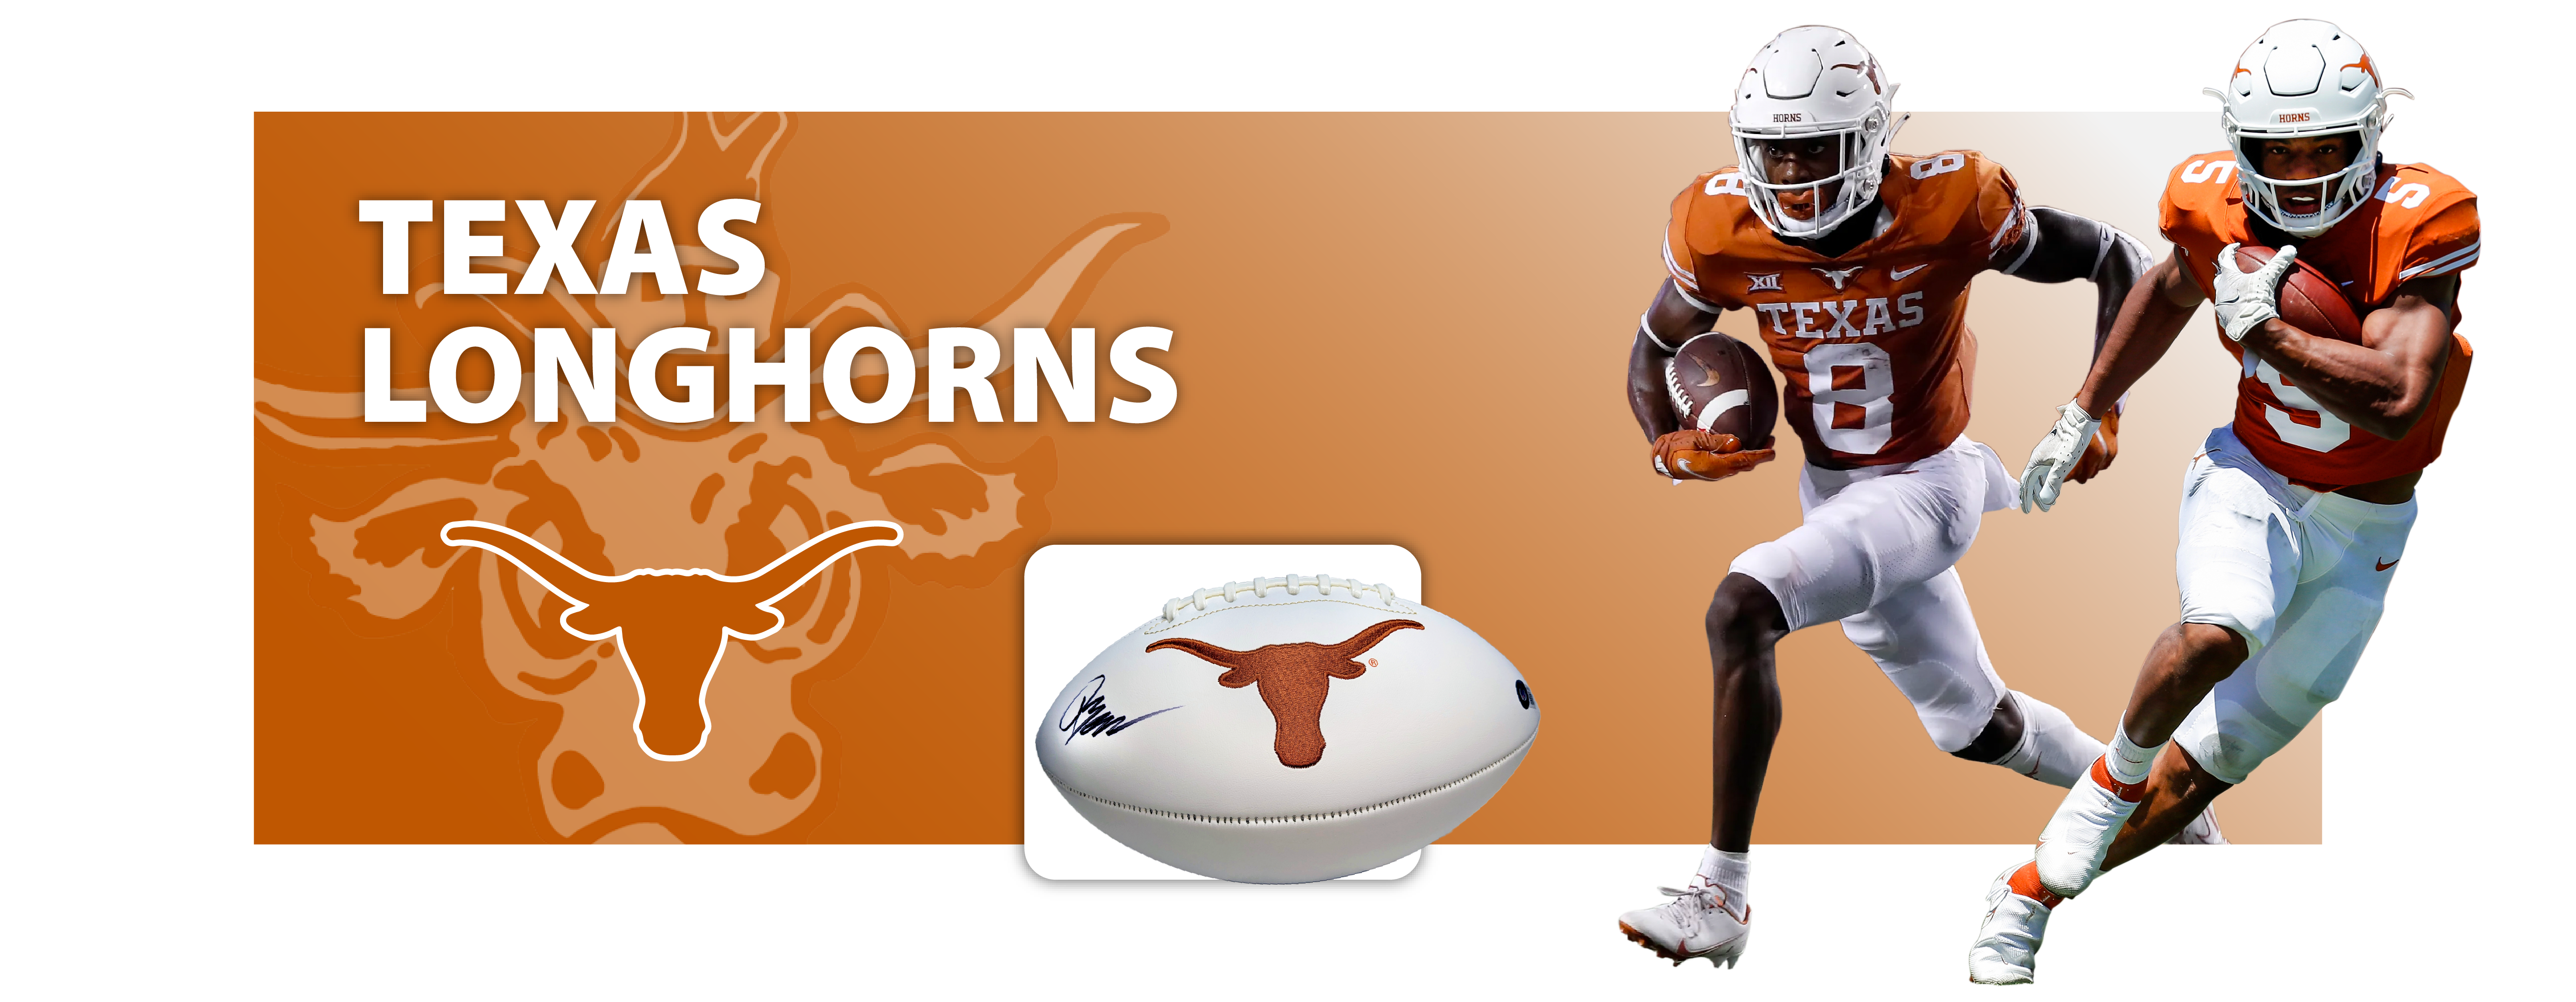 Texas Longhorns – Creative Sports